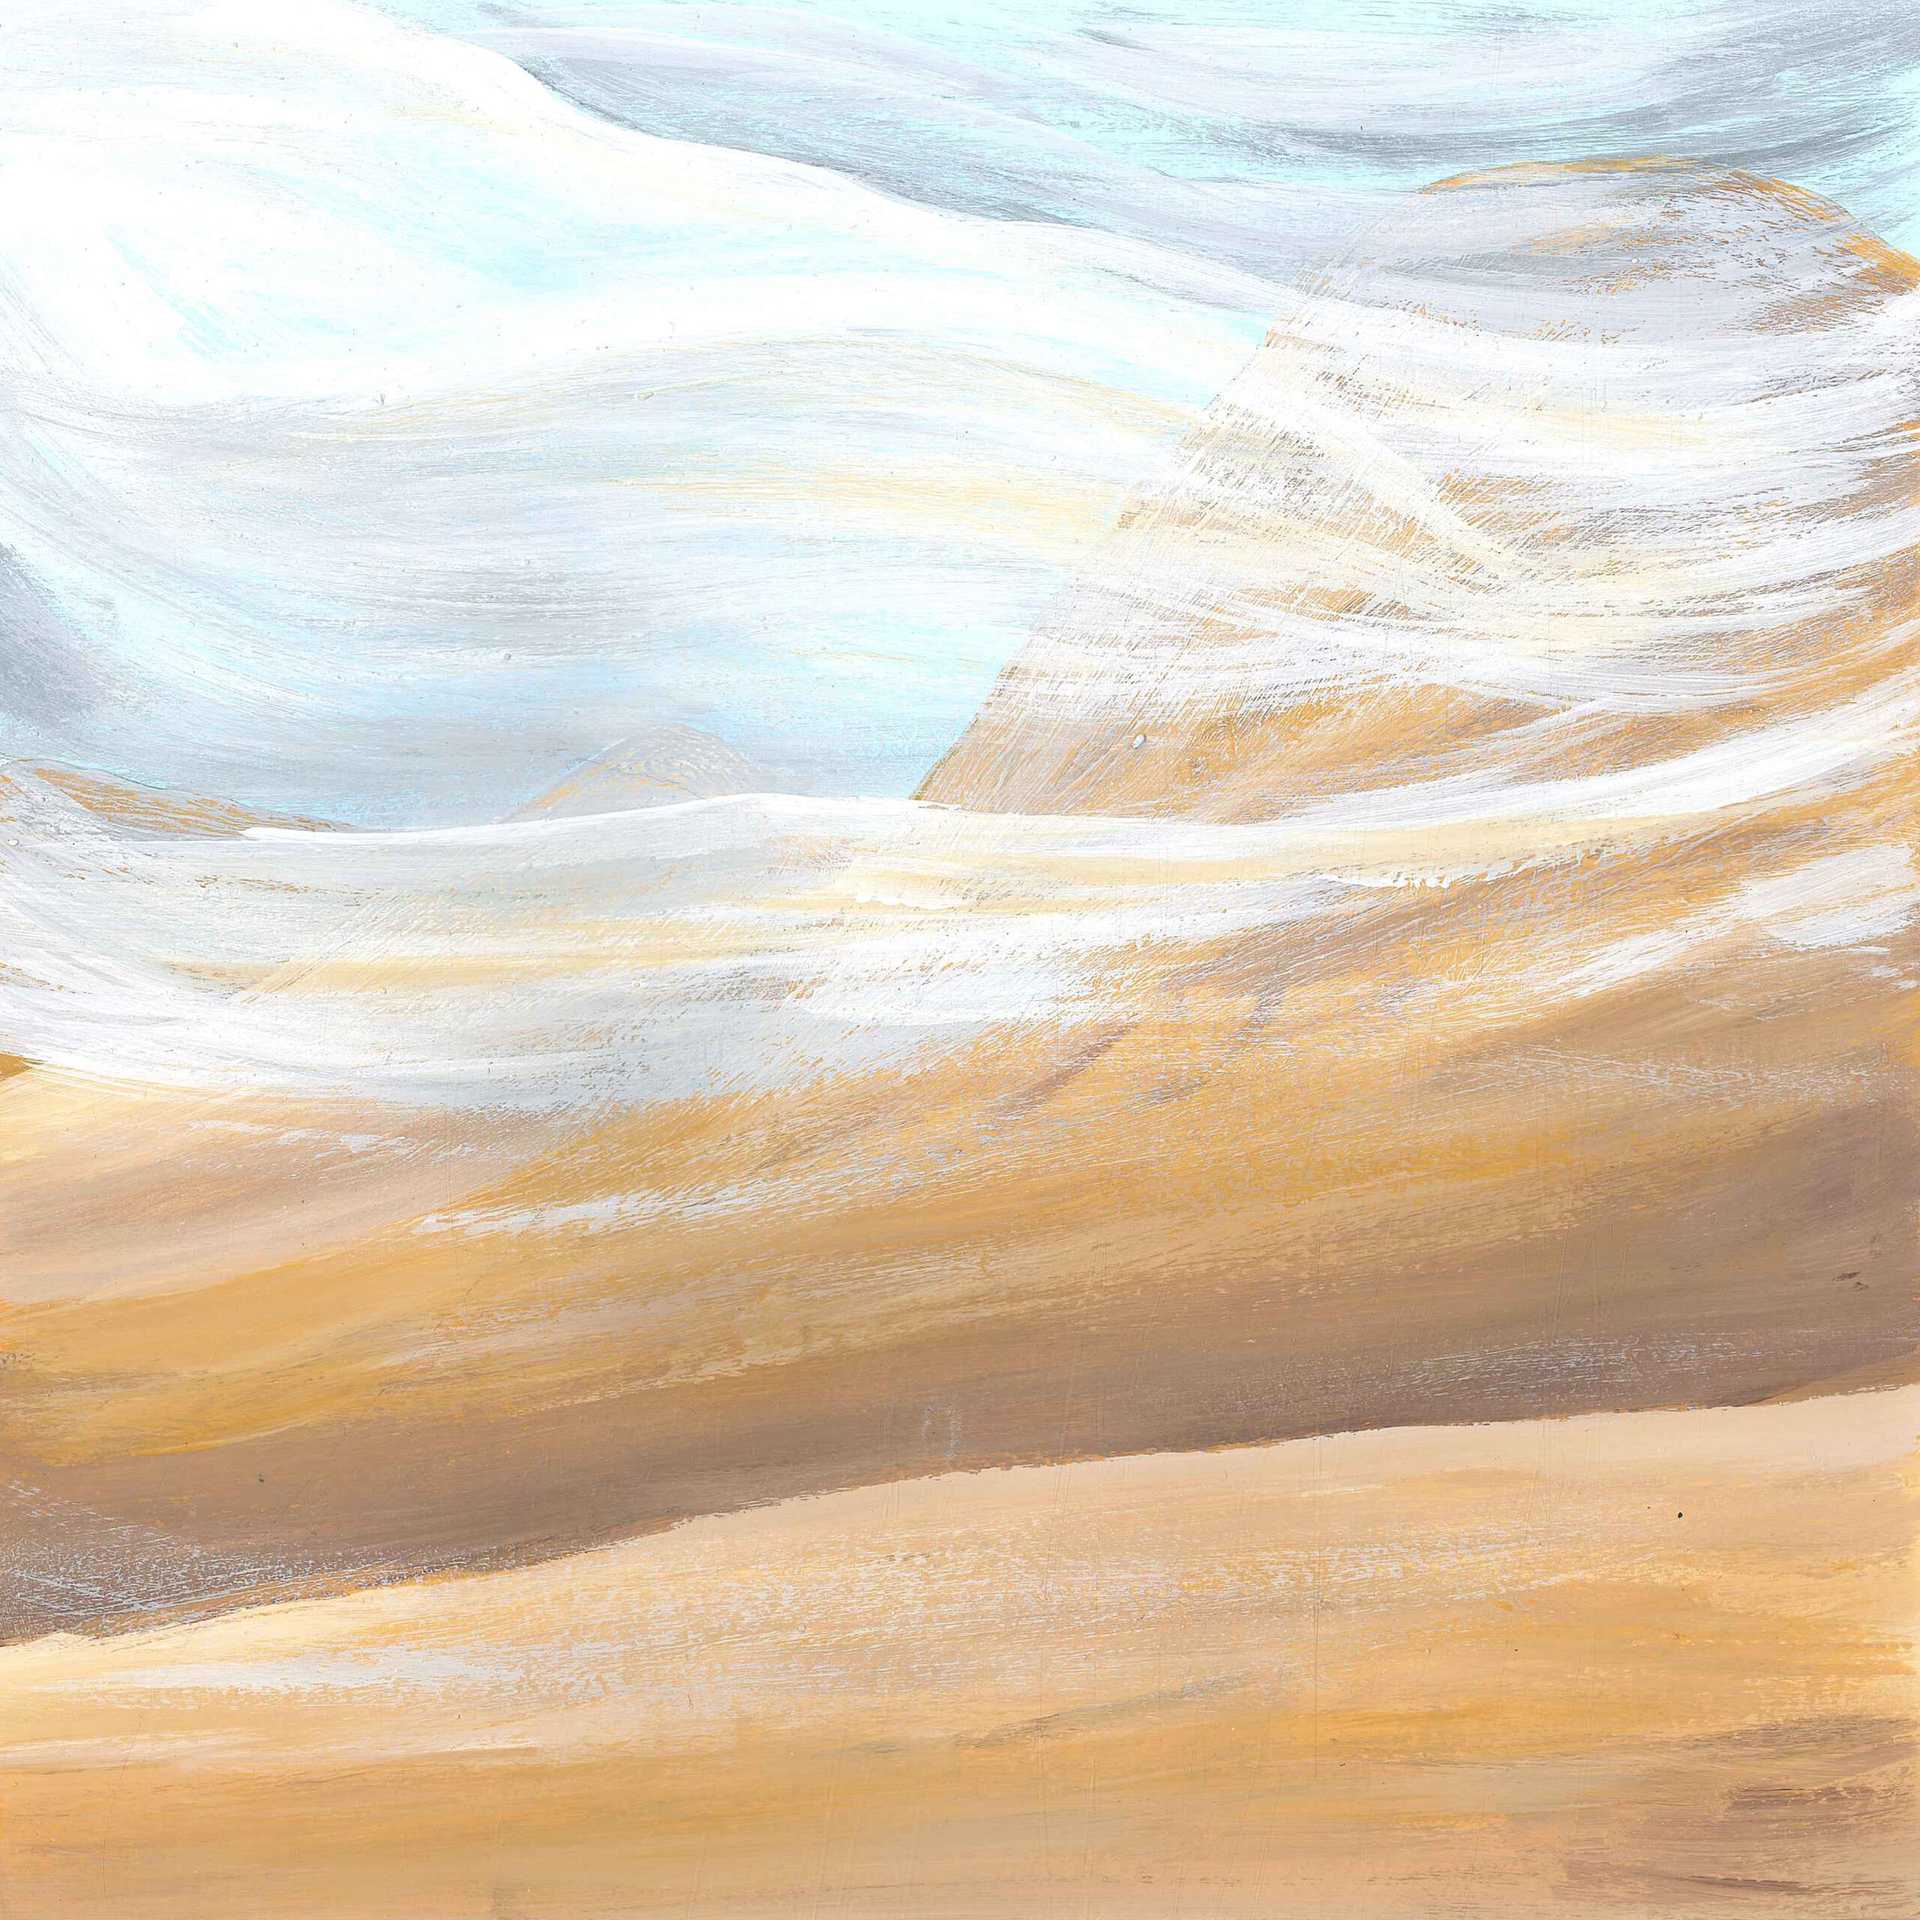 Windstorm in the Atacama Desert - nature landscape painting - earth.fm